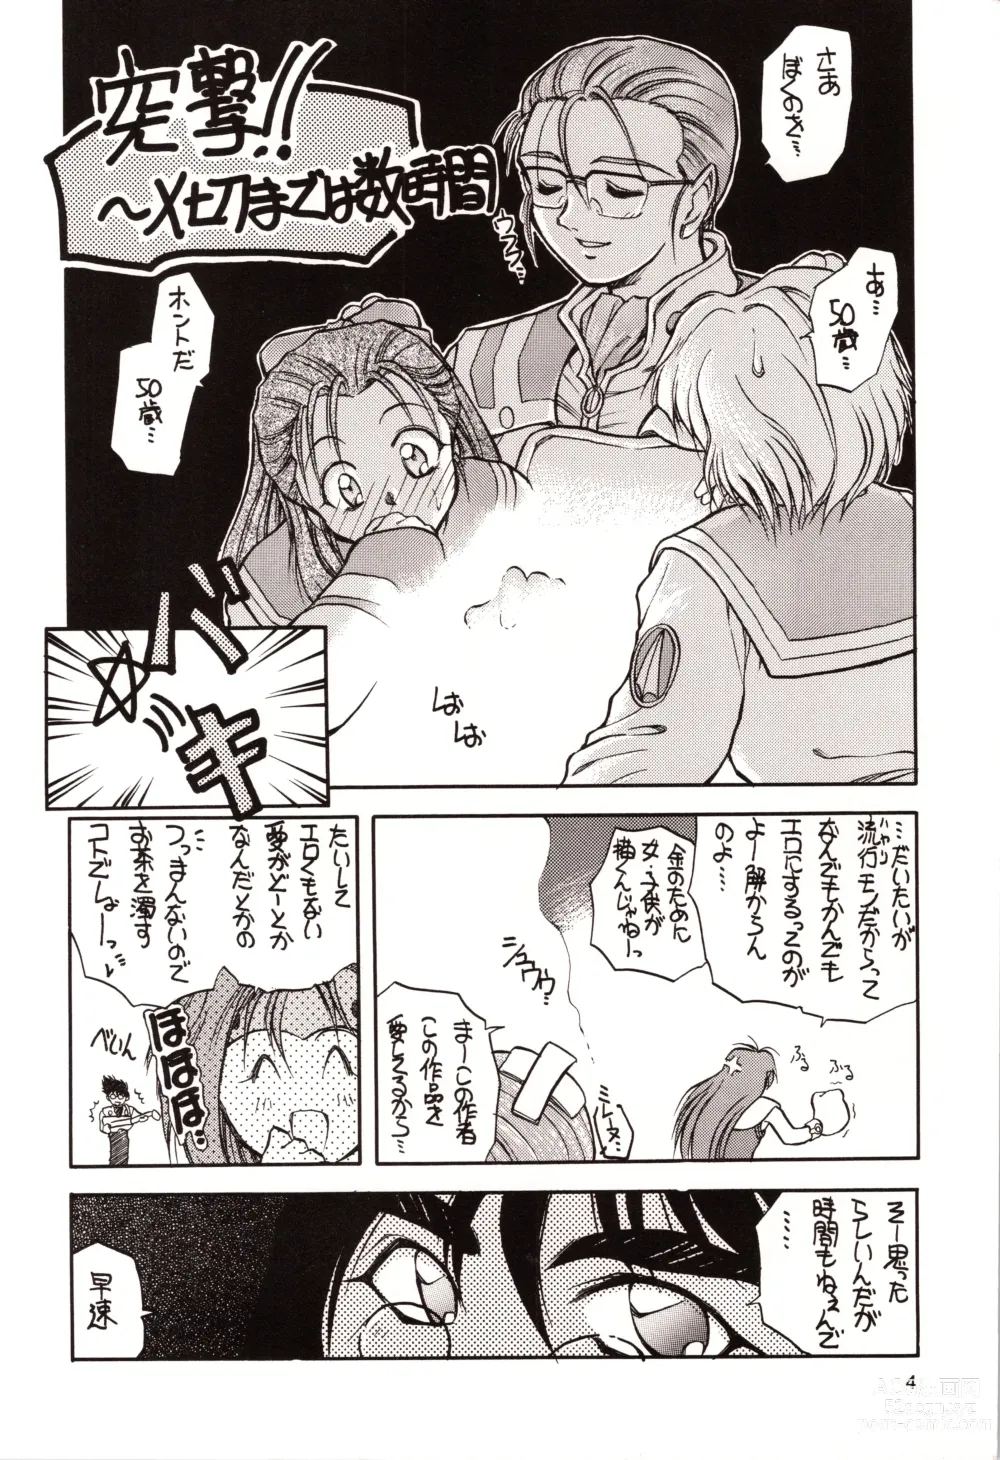 Page 4 of doujinshi Chou Sairoku PINKISH COLLECTION